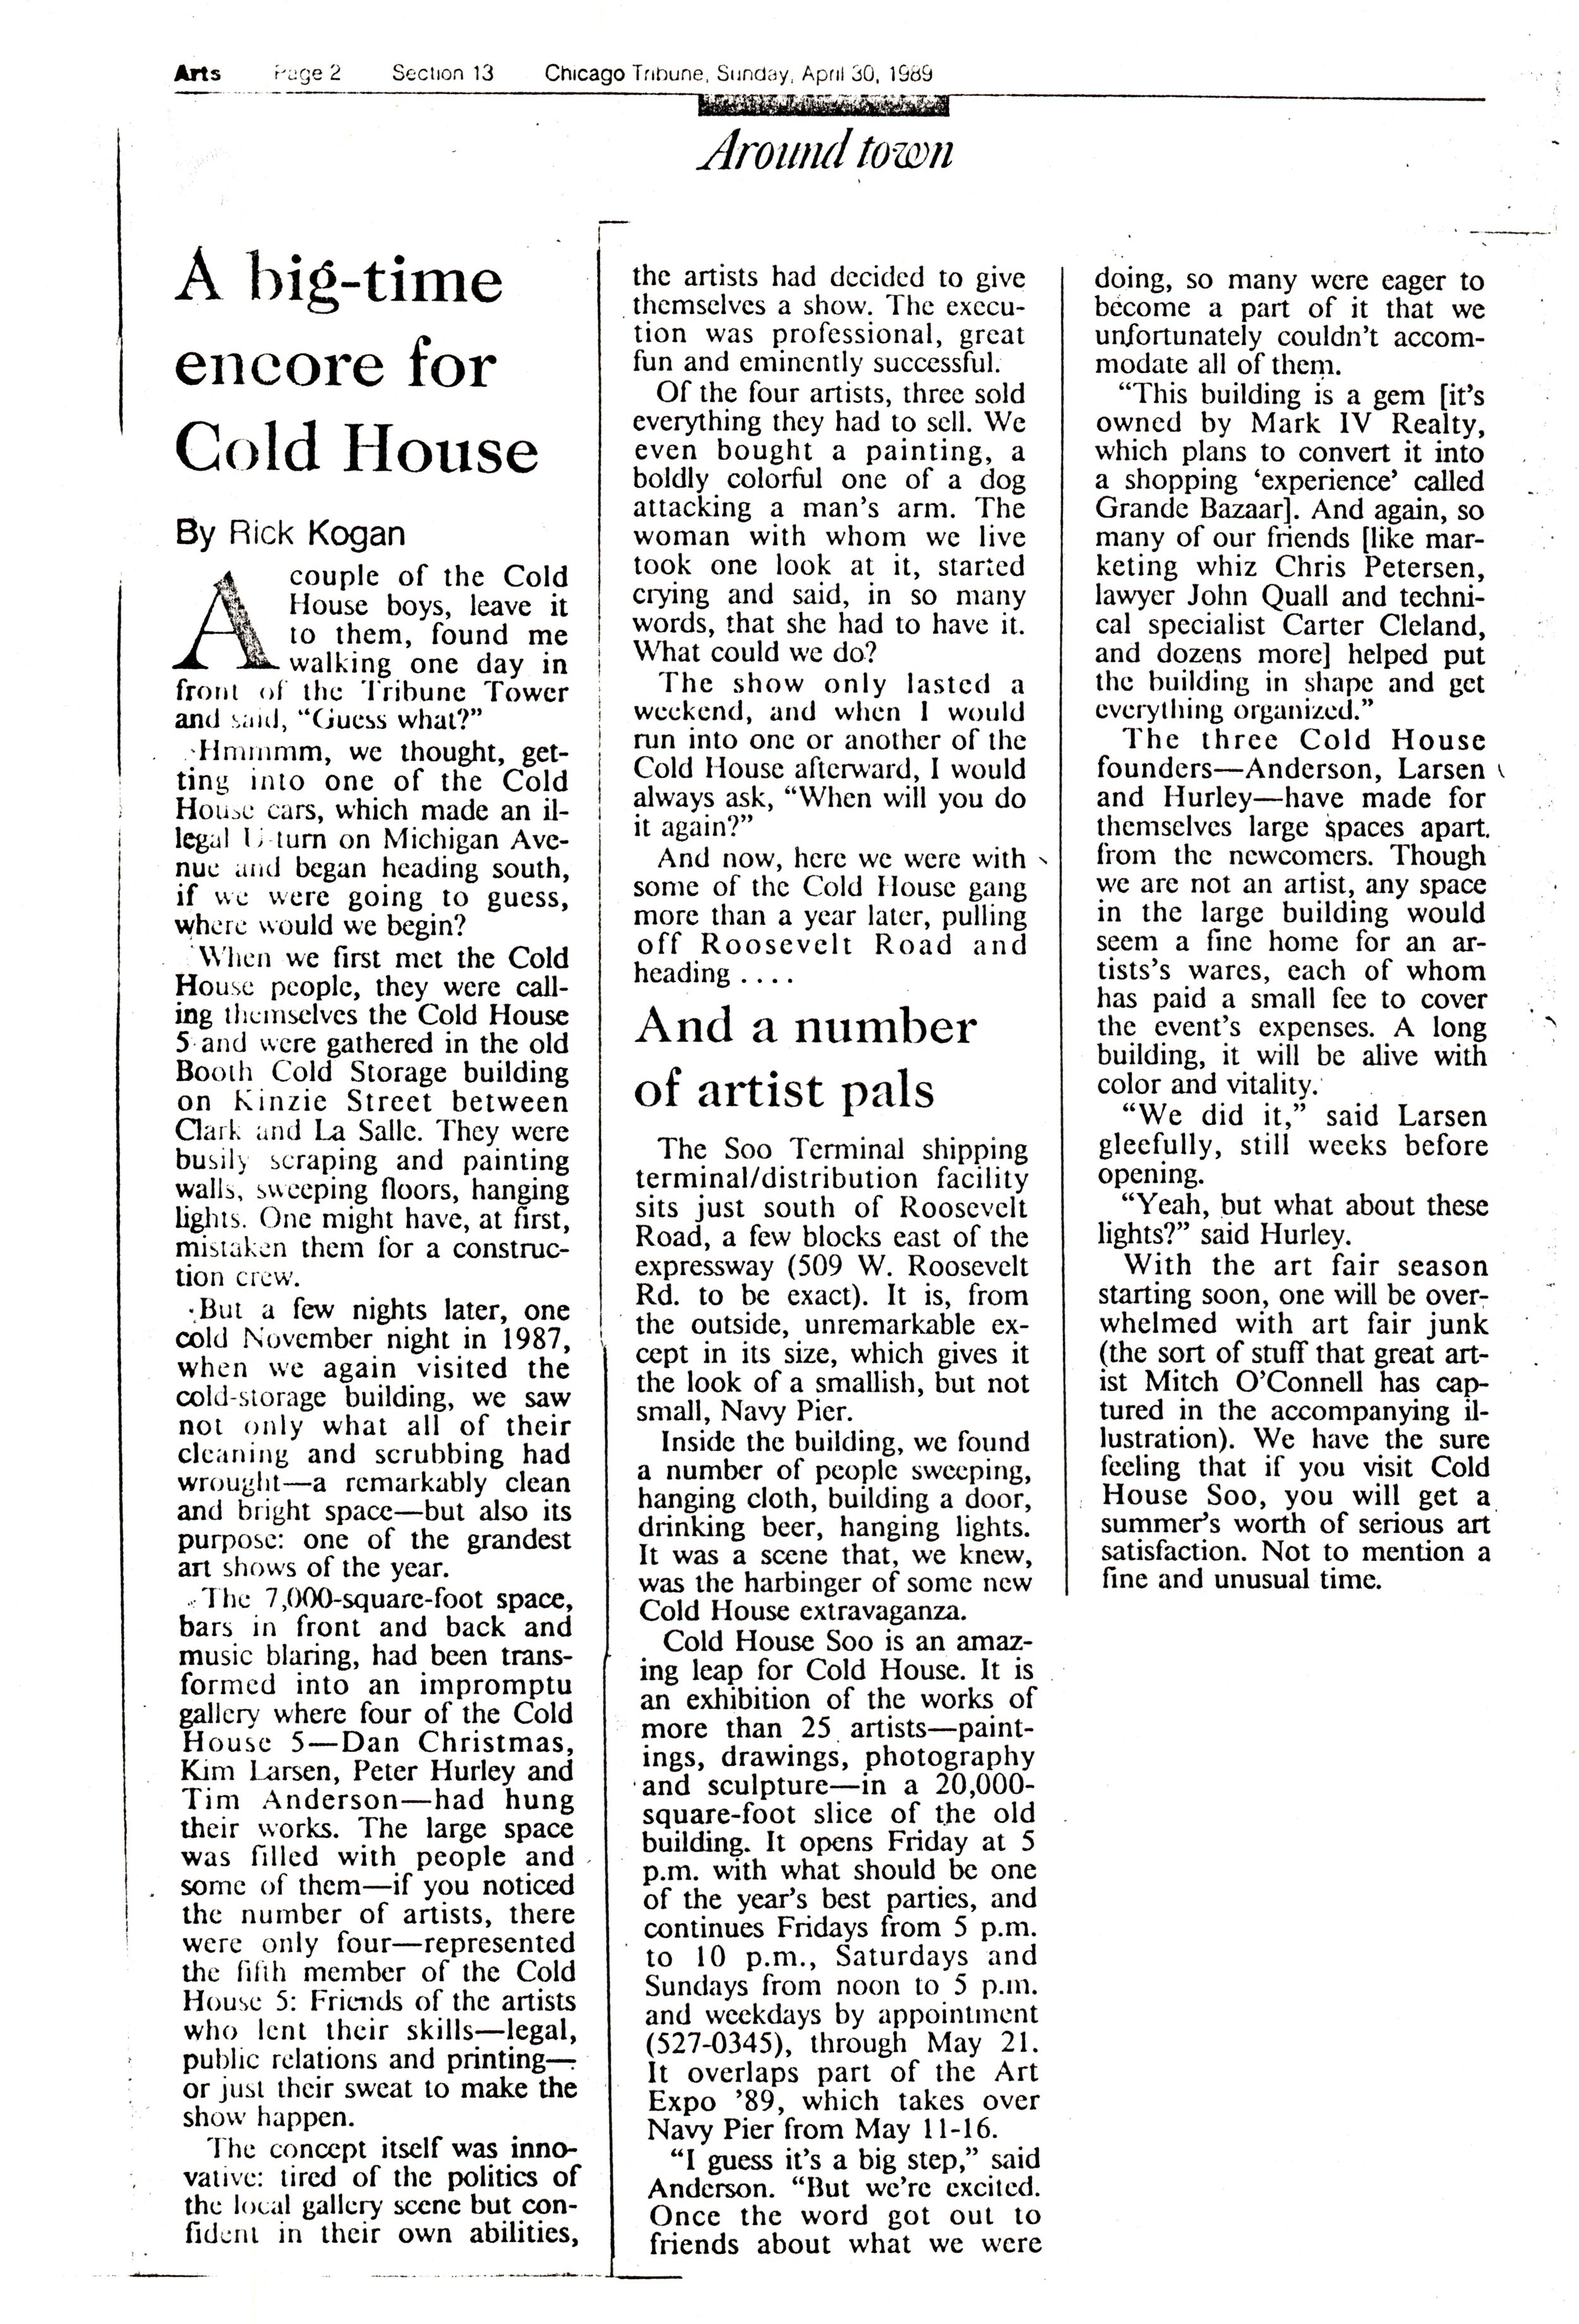 Cold_House_Chicago_Tribune_1989 2.jpeg